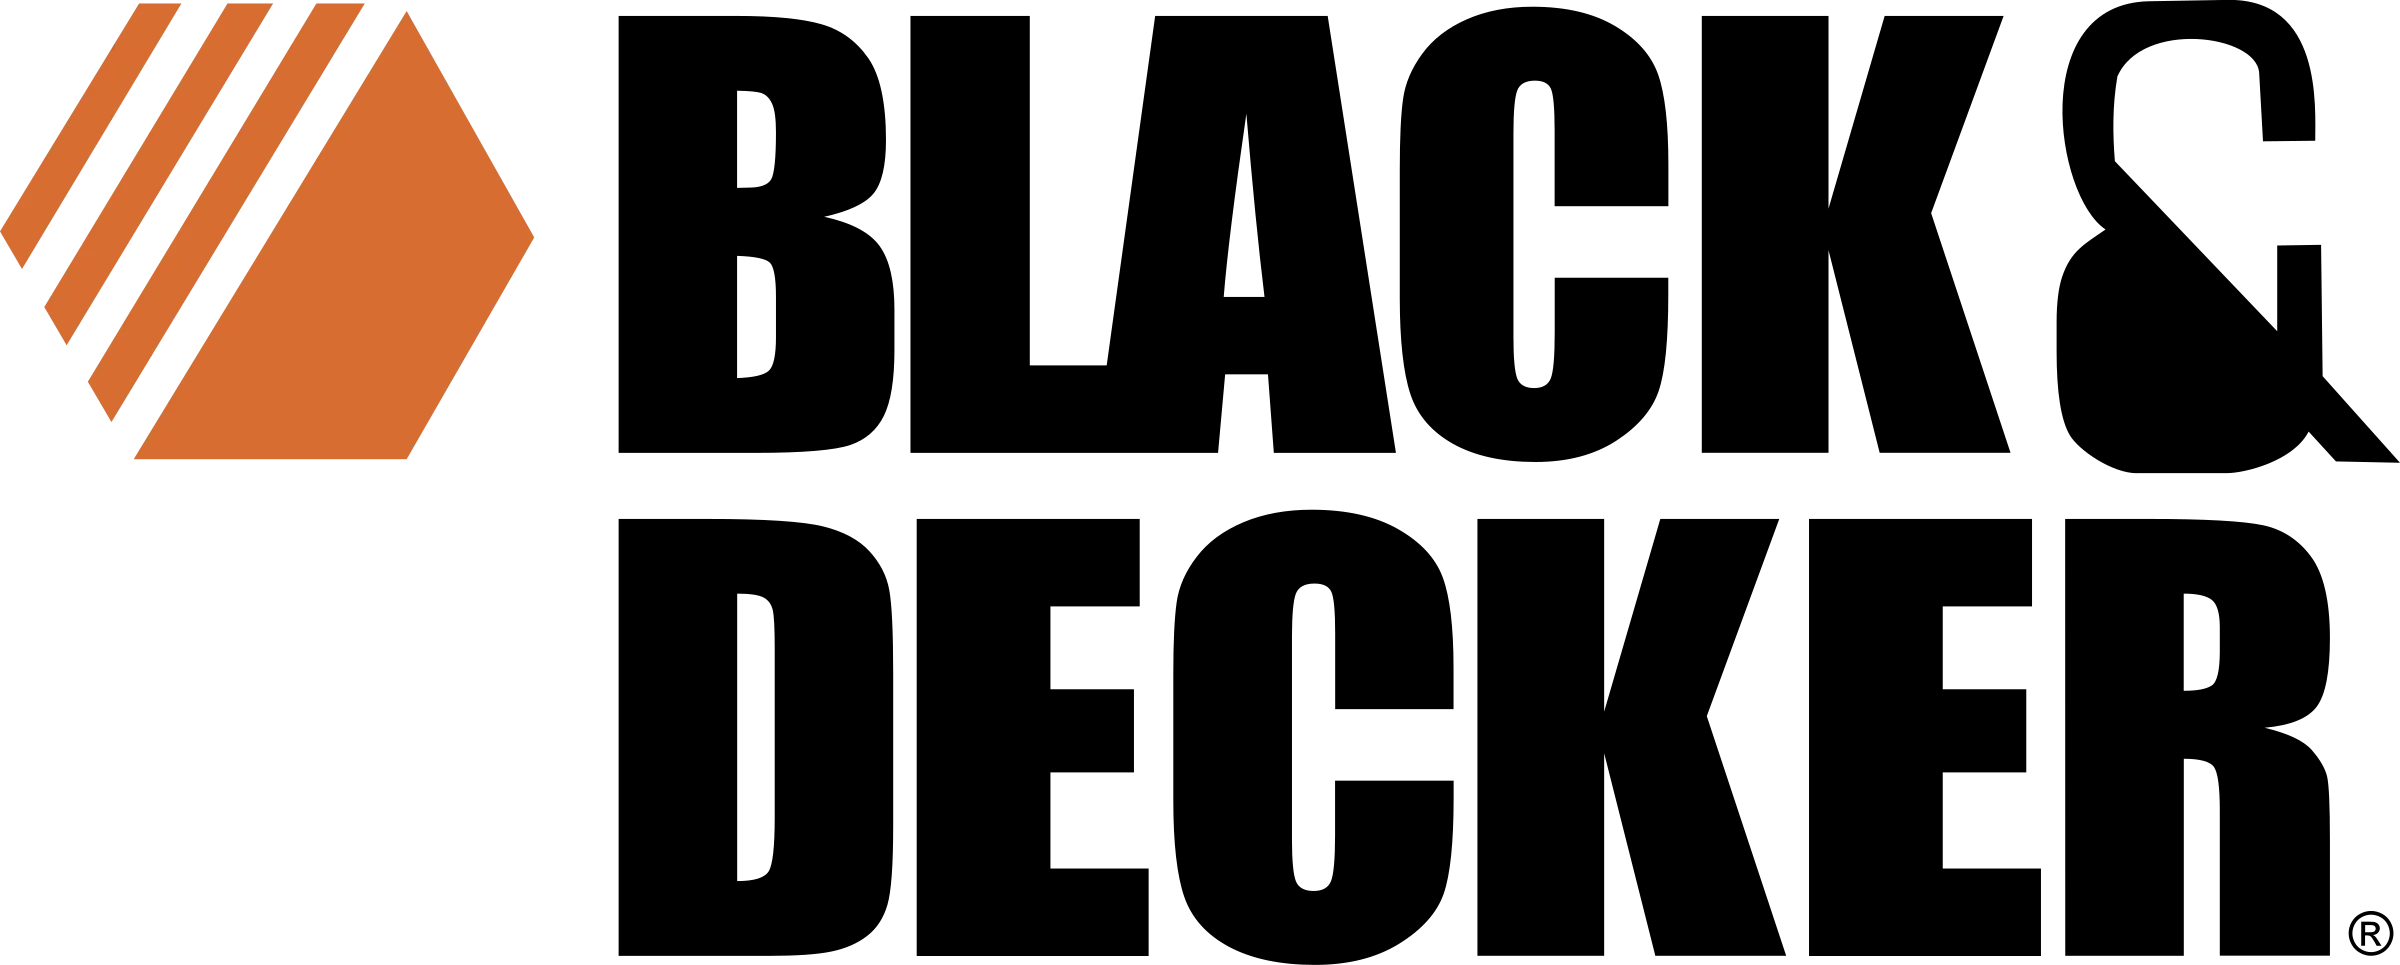 black-decker-3-logo-png-transparent